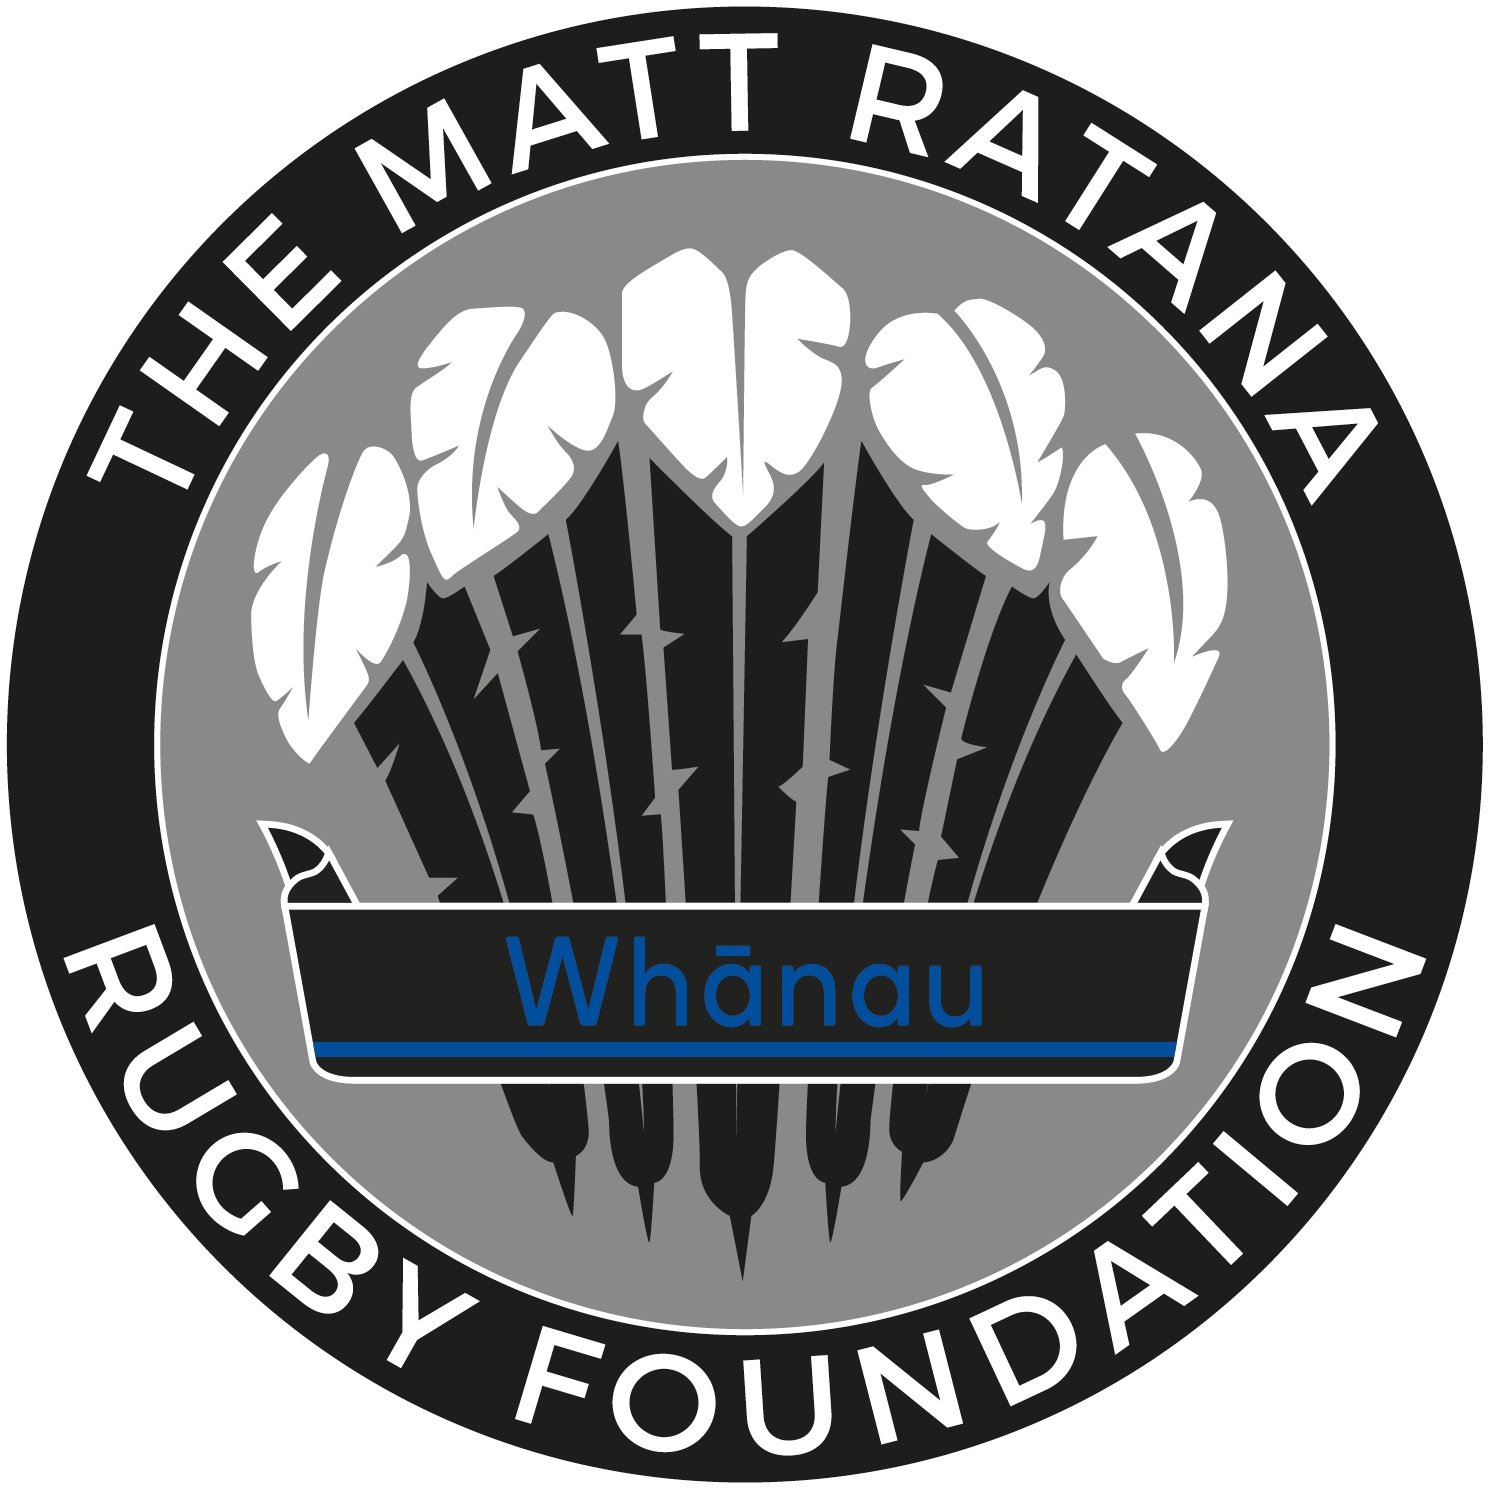 Matt Ratana Rugby Foundation